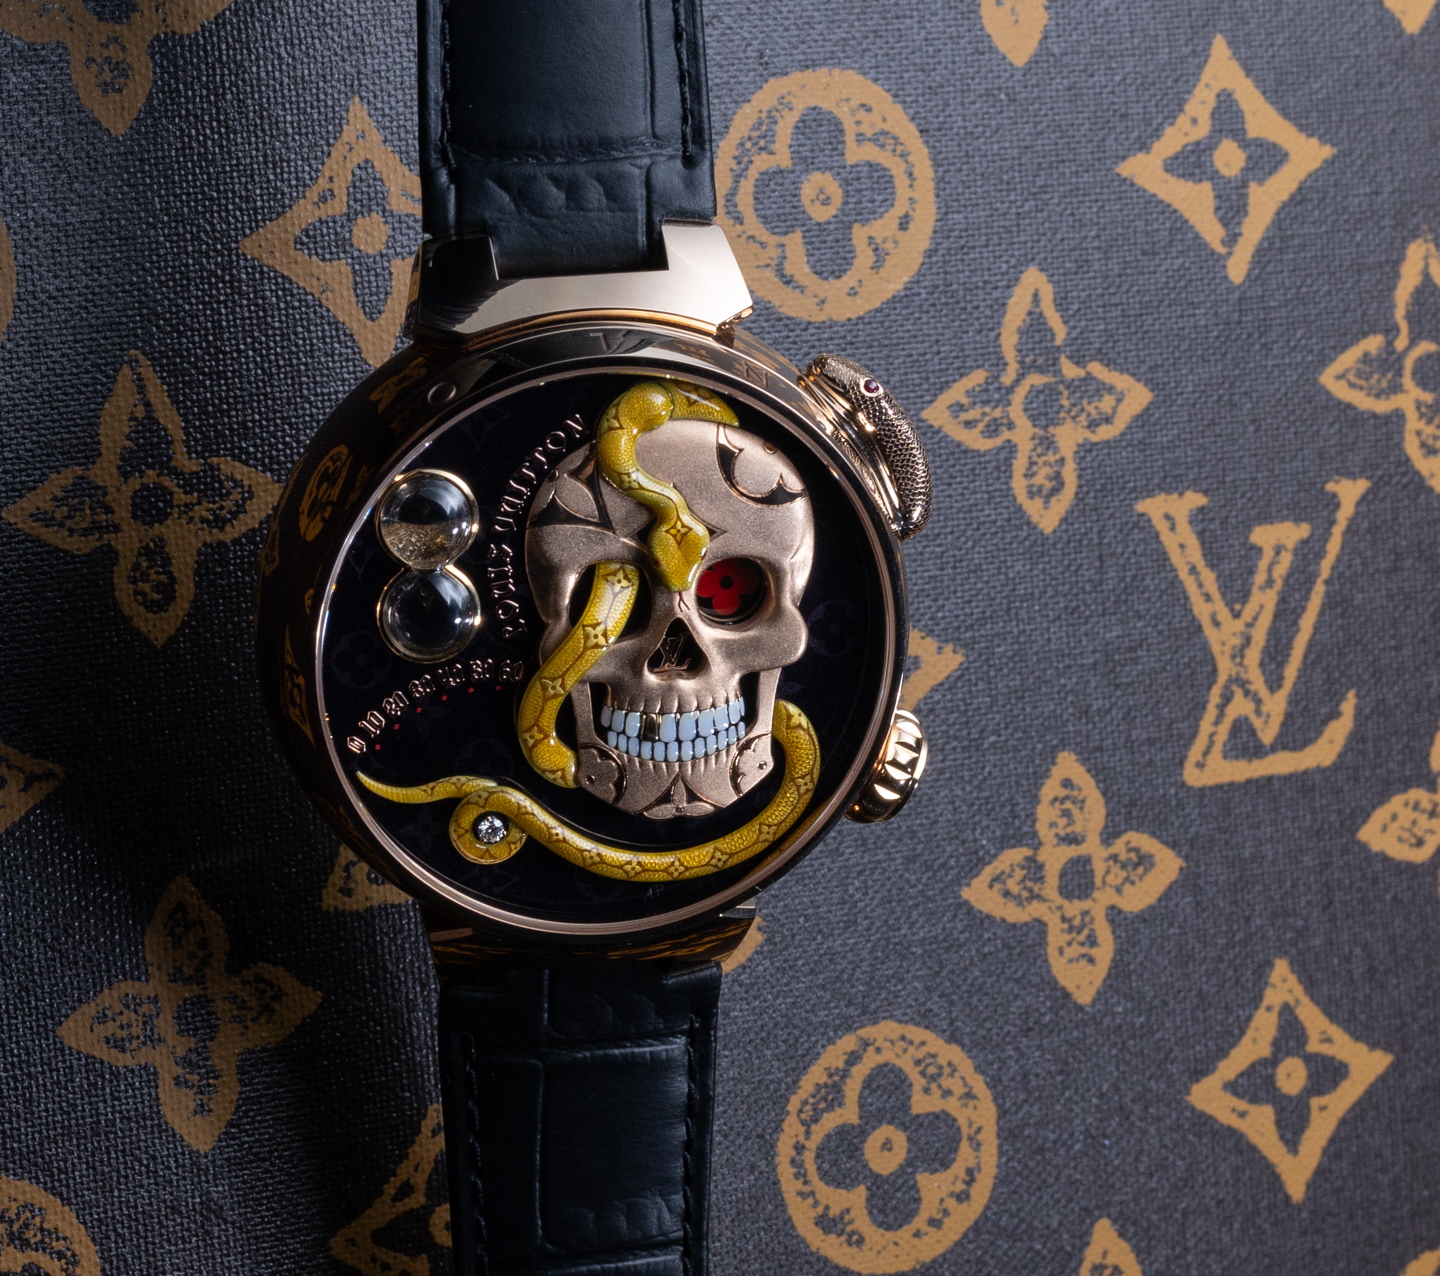 Louis Vuitton Reveals Its Subversive Style With The Tambour Carpe Diem Watch